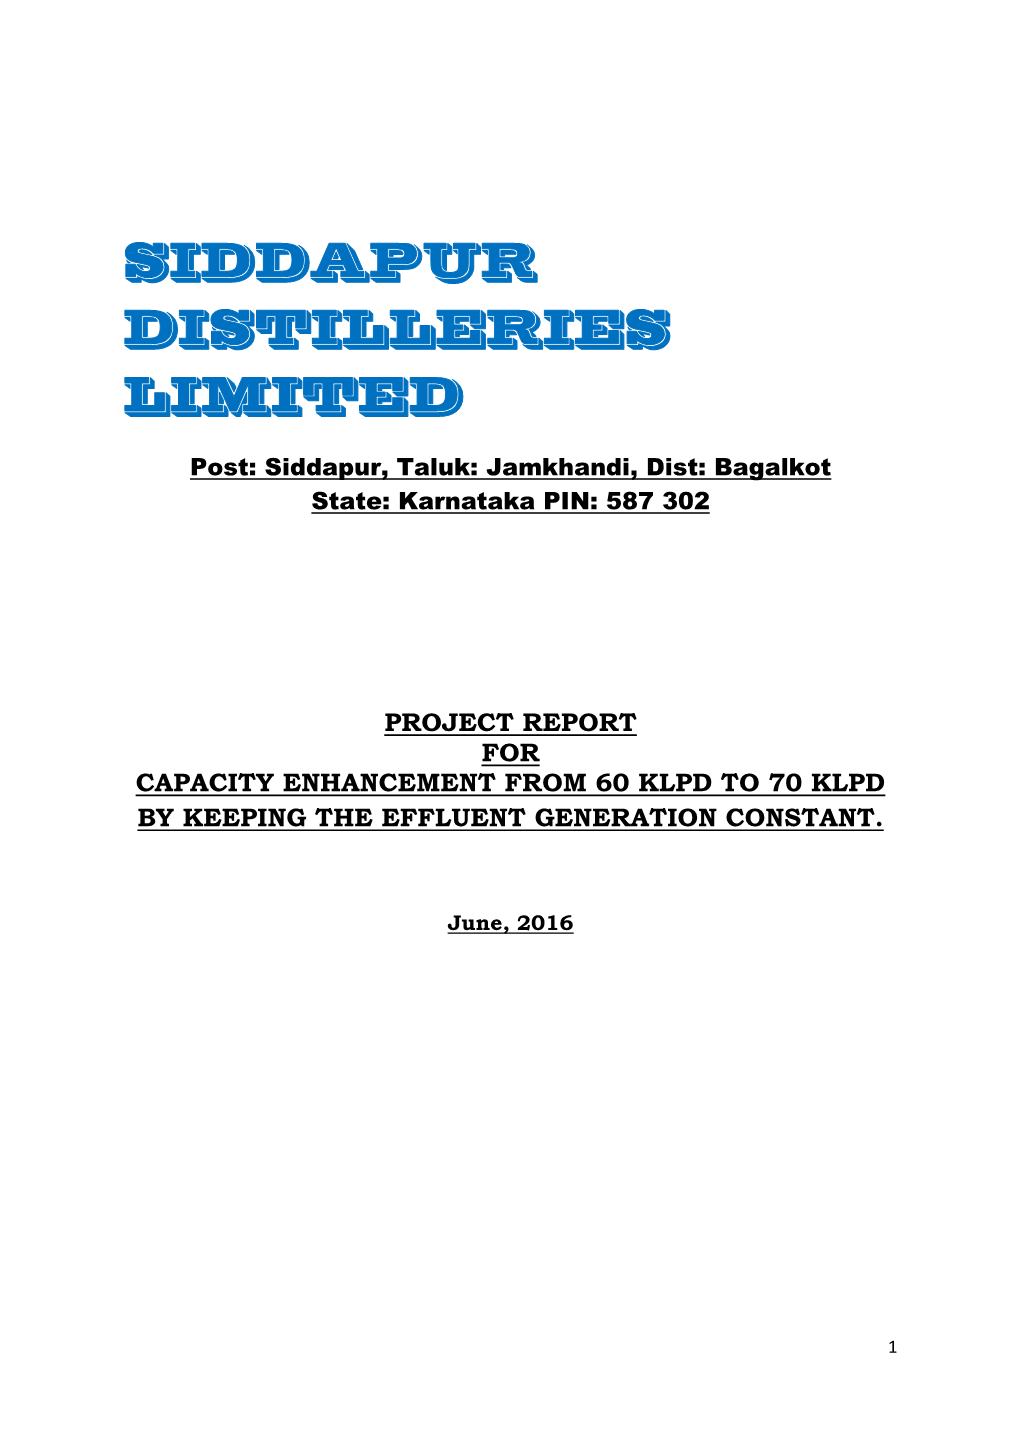 Siddapur Distilleries Limited